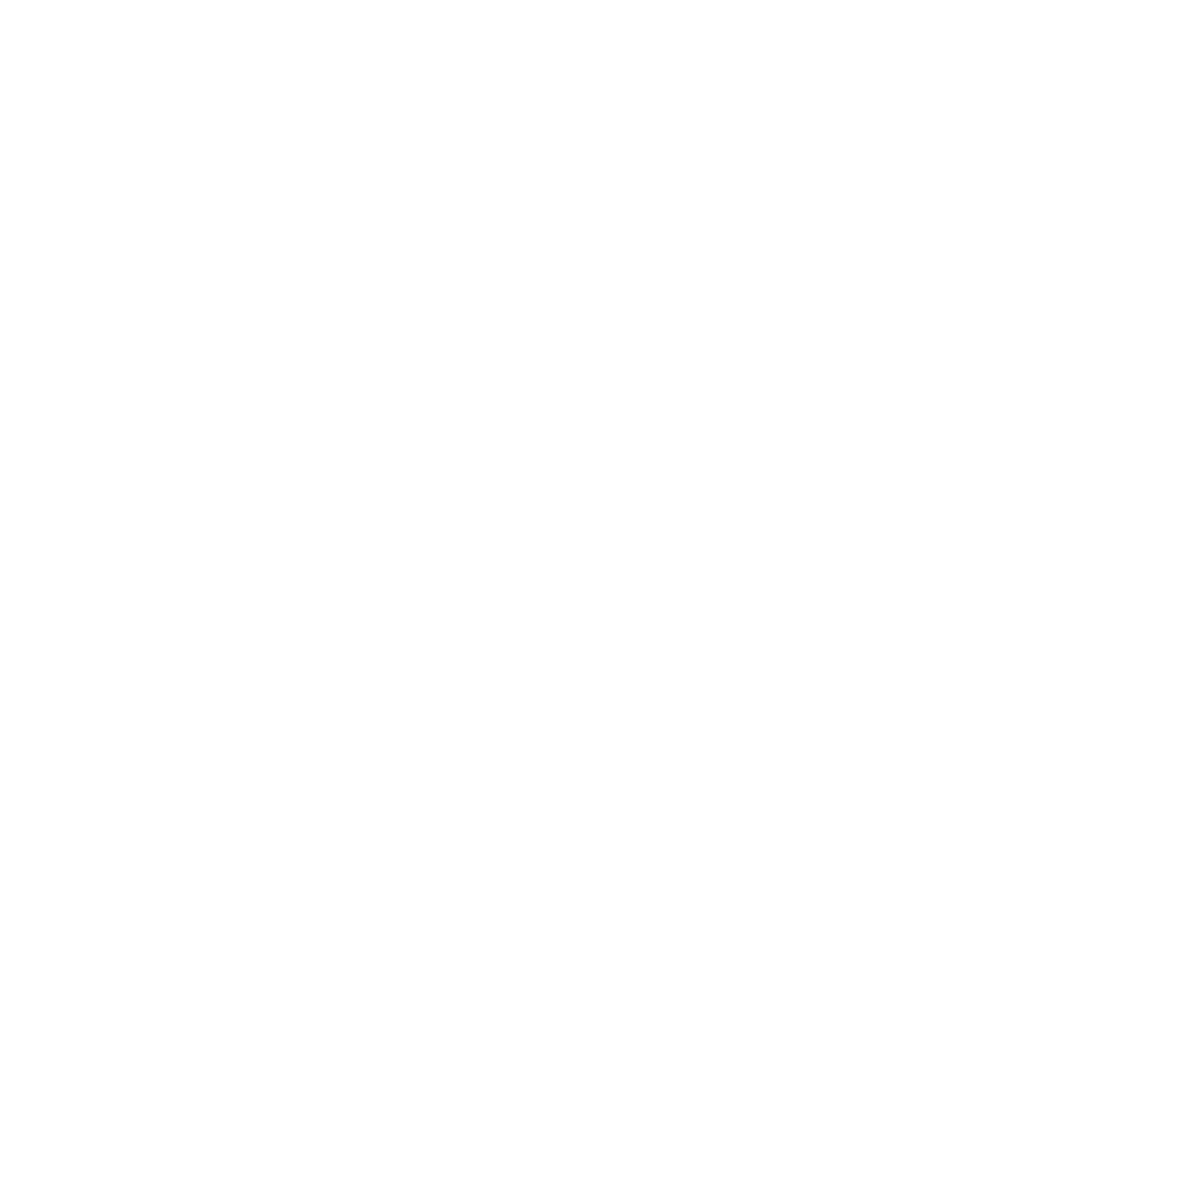 Area Environments